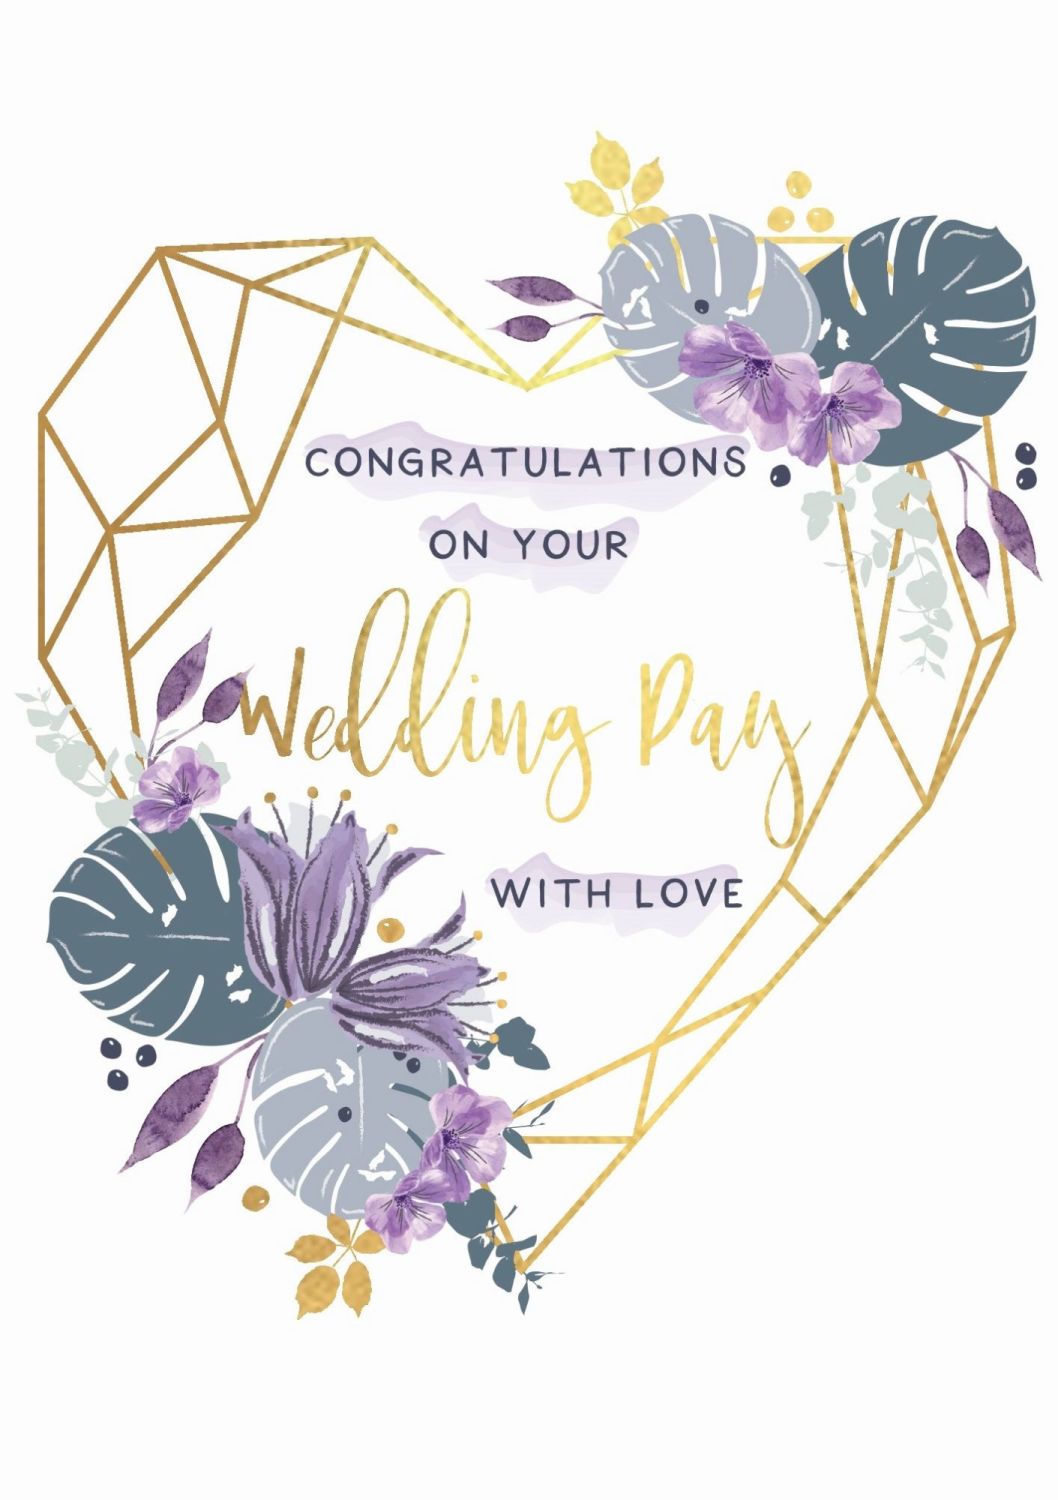 Free Printable Wedding Wishes Card - Image to u